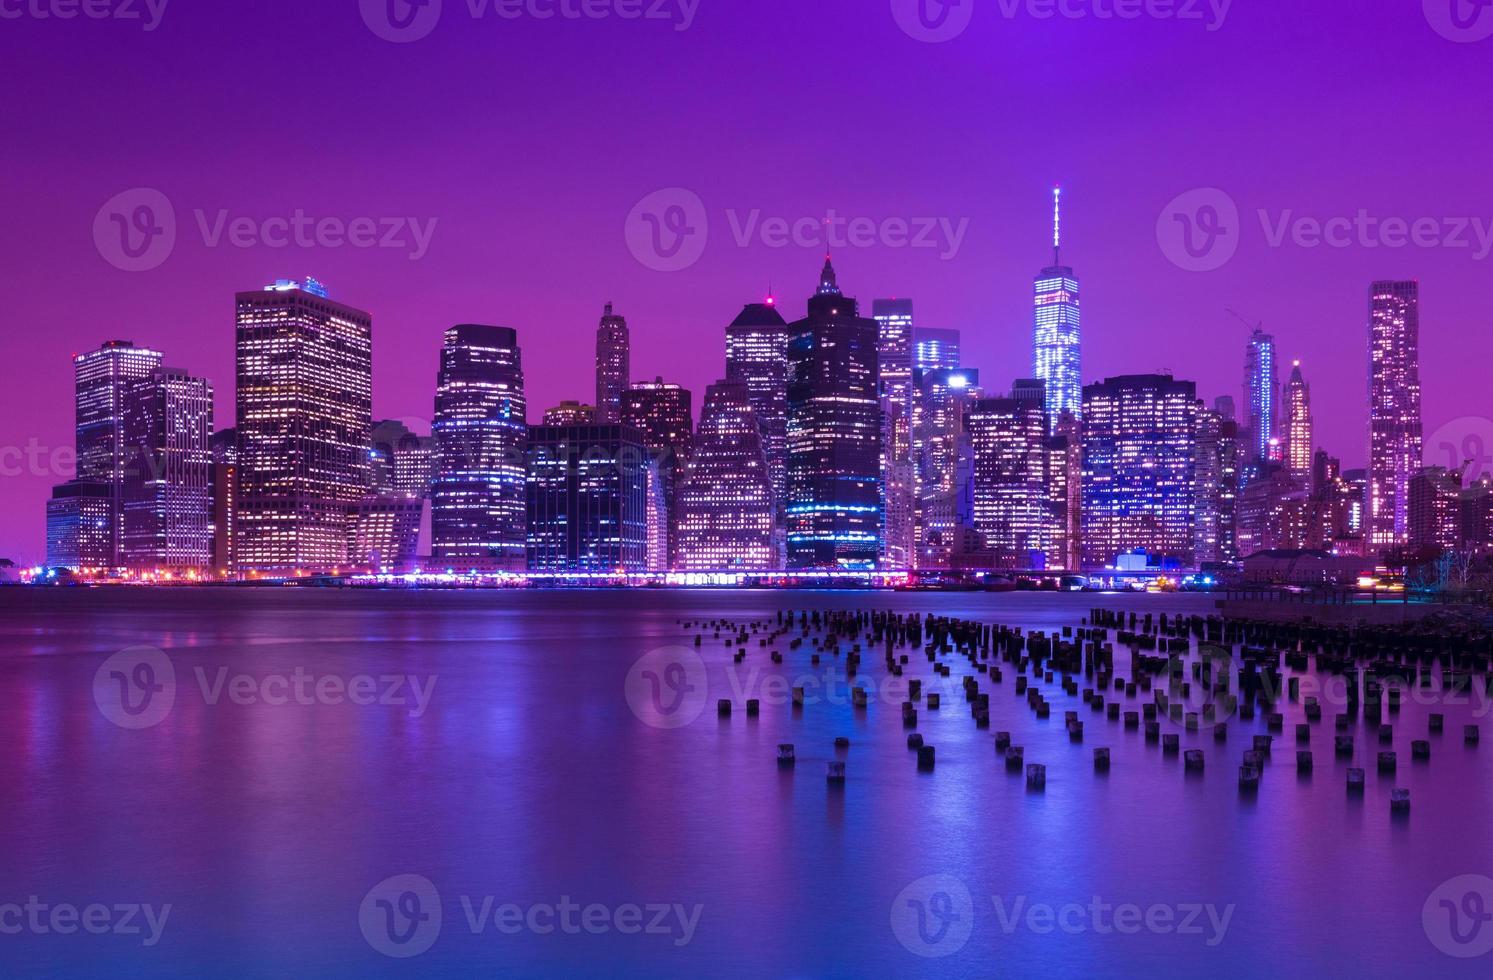 manhattans skyline på natten. new-york stadsbild. ny, usa foto